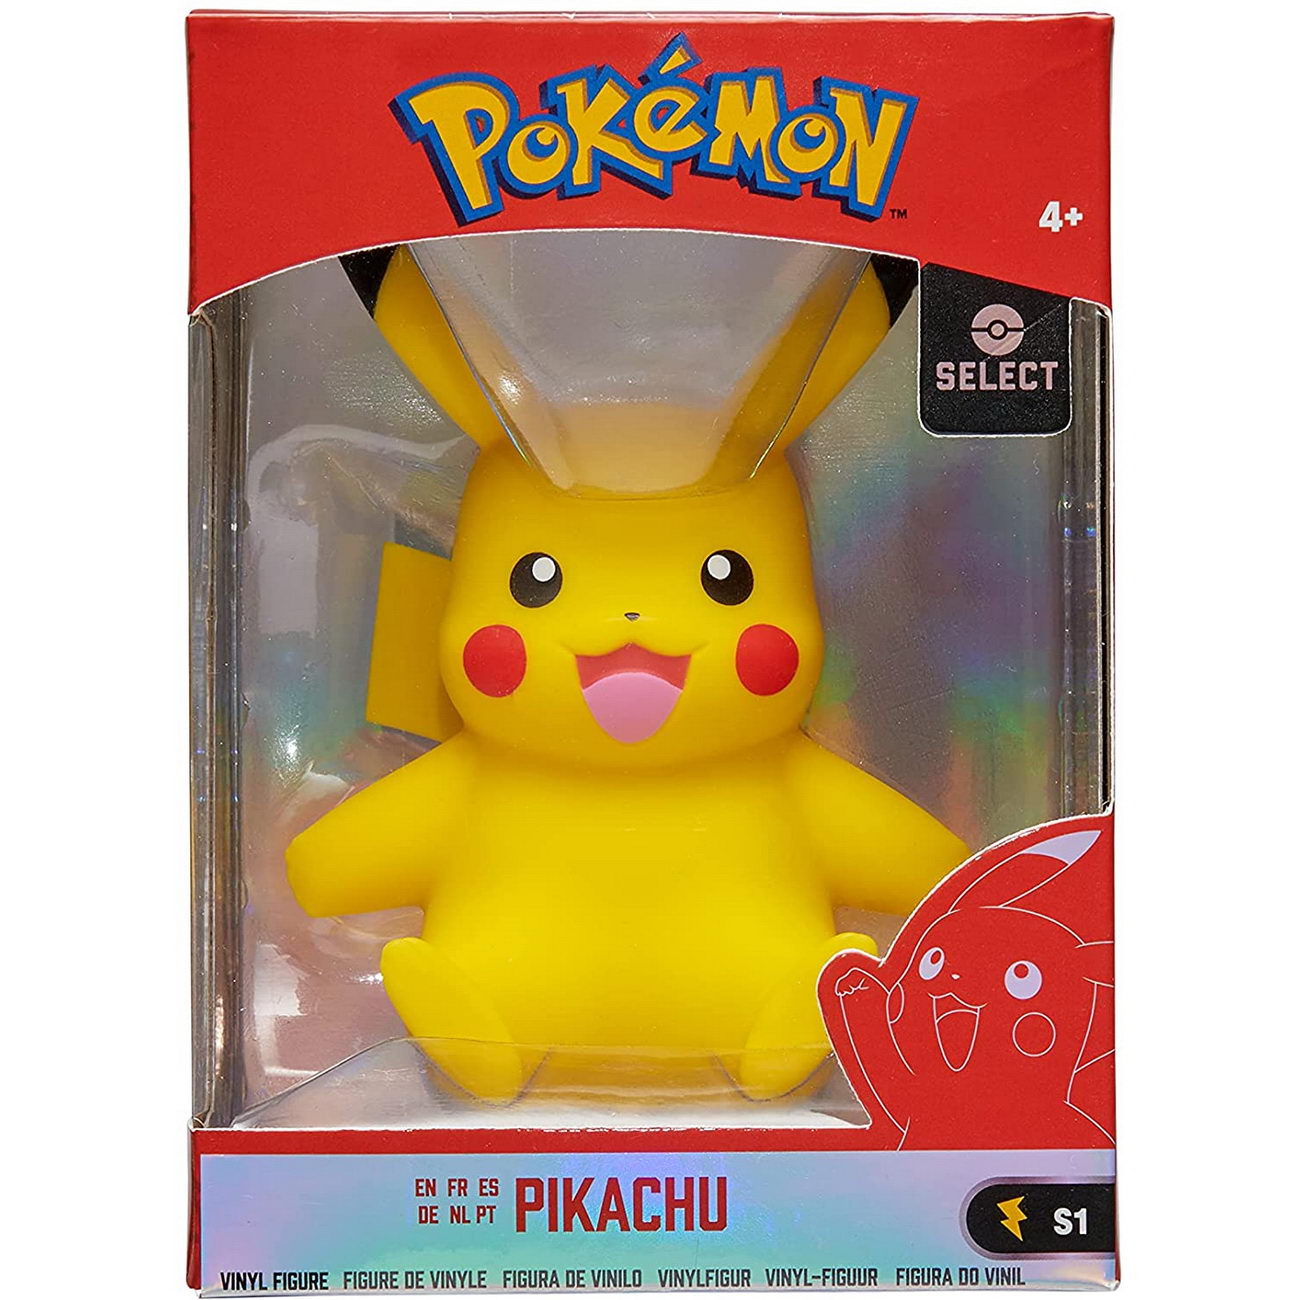 Pikachu - Pokemon Kanto Sammel Figur (37262)